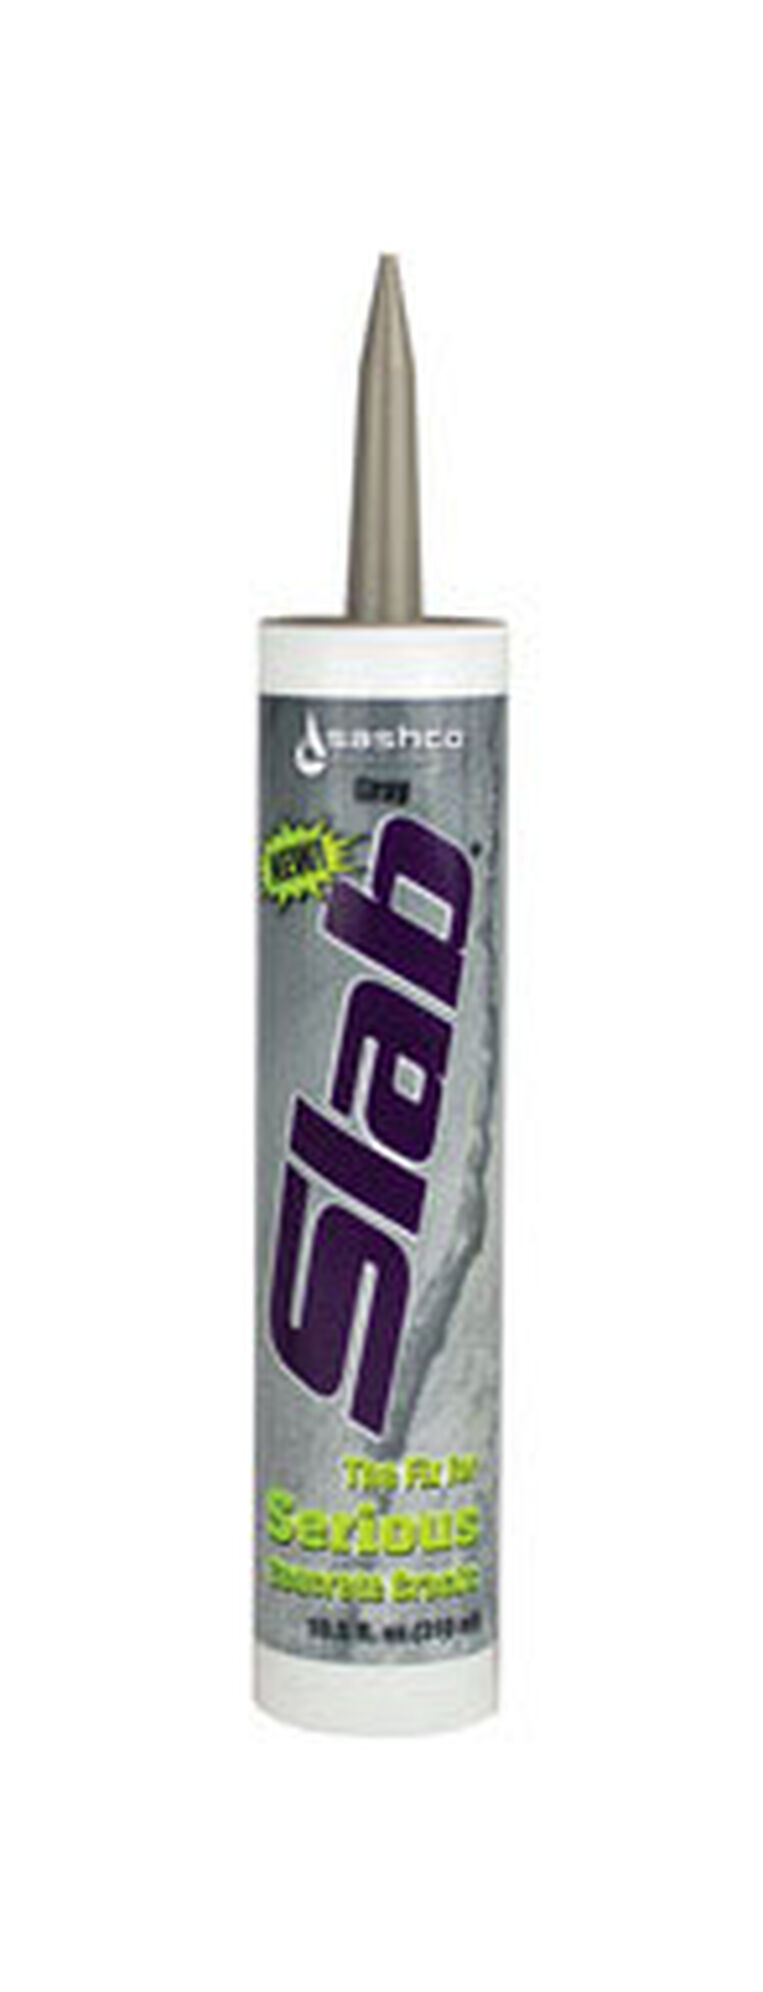 Sashco Slab Cement Crack Filler Ready to Use 10.5 oz. | Stine Home